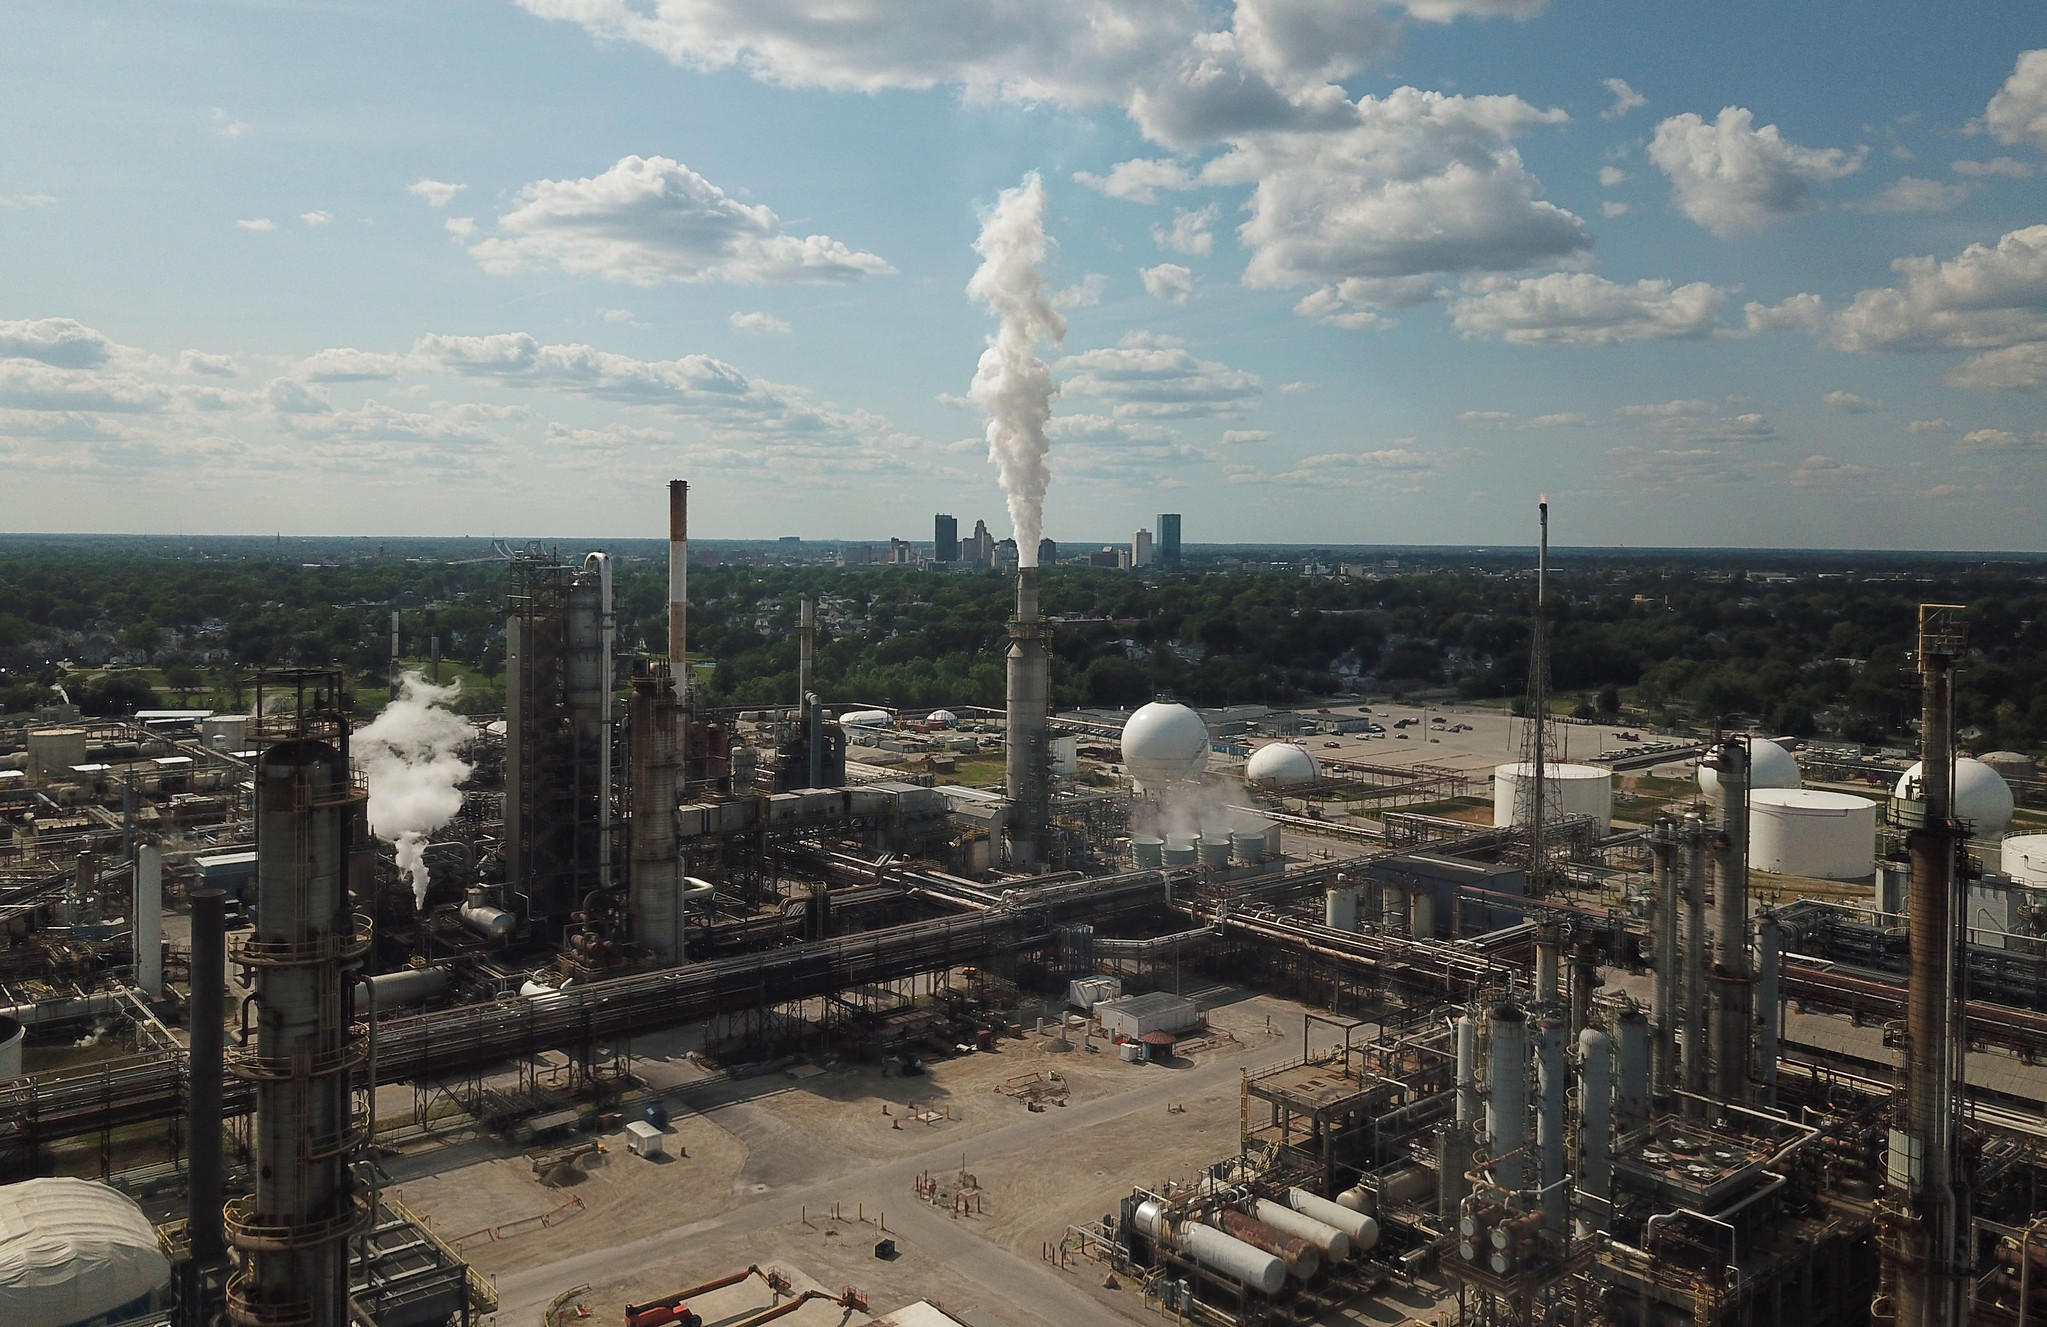 Toledo Refining Co Refinery in Toledo, OH, July 2019